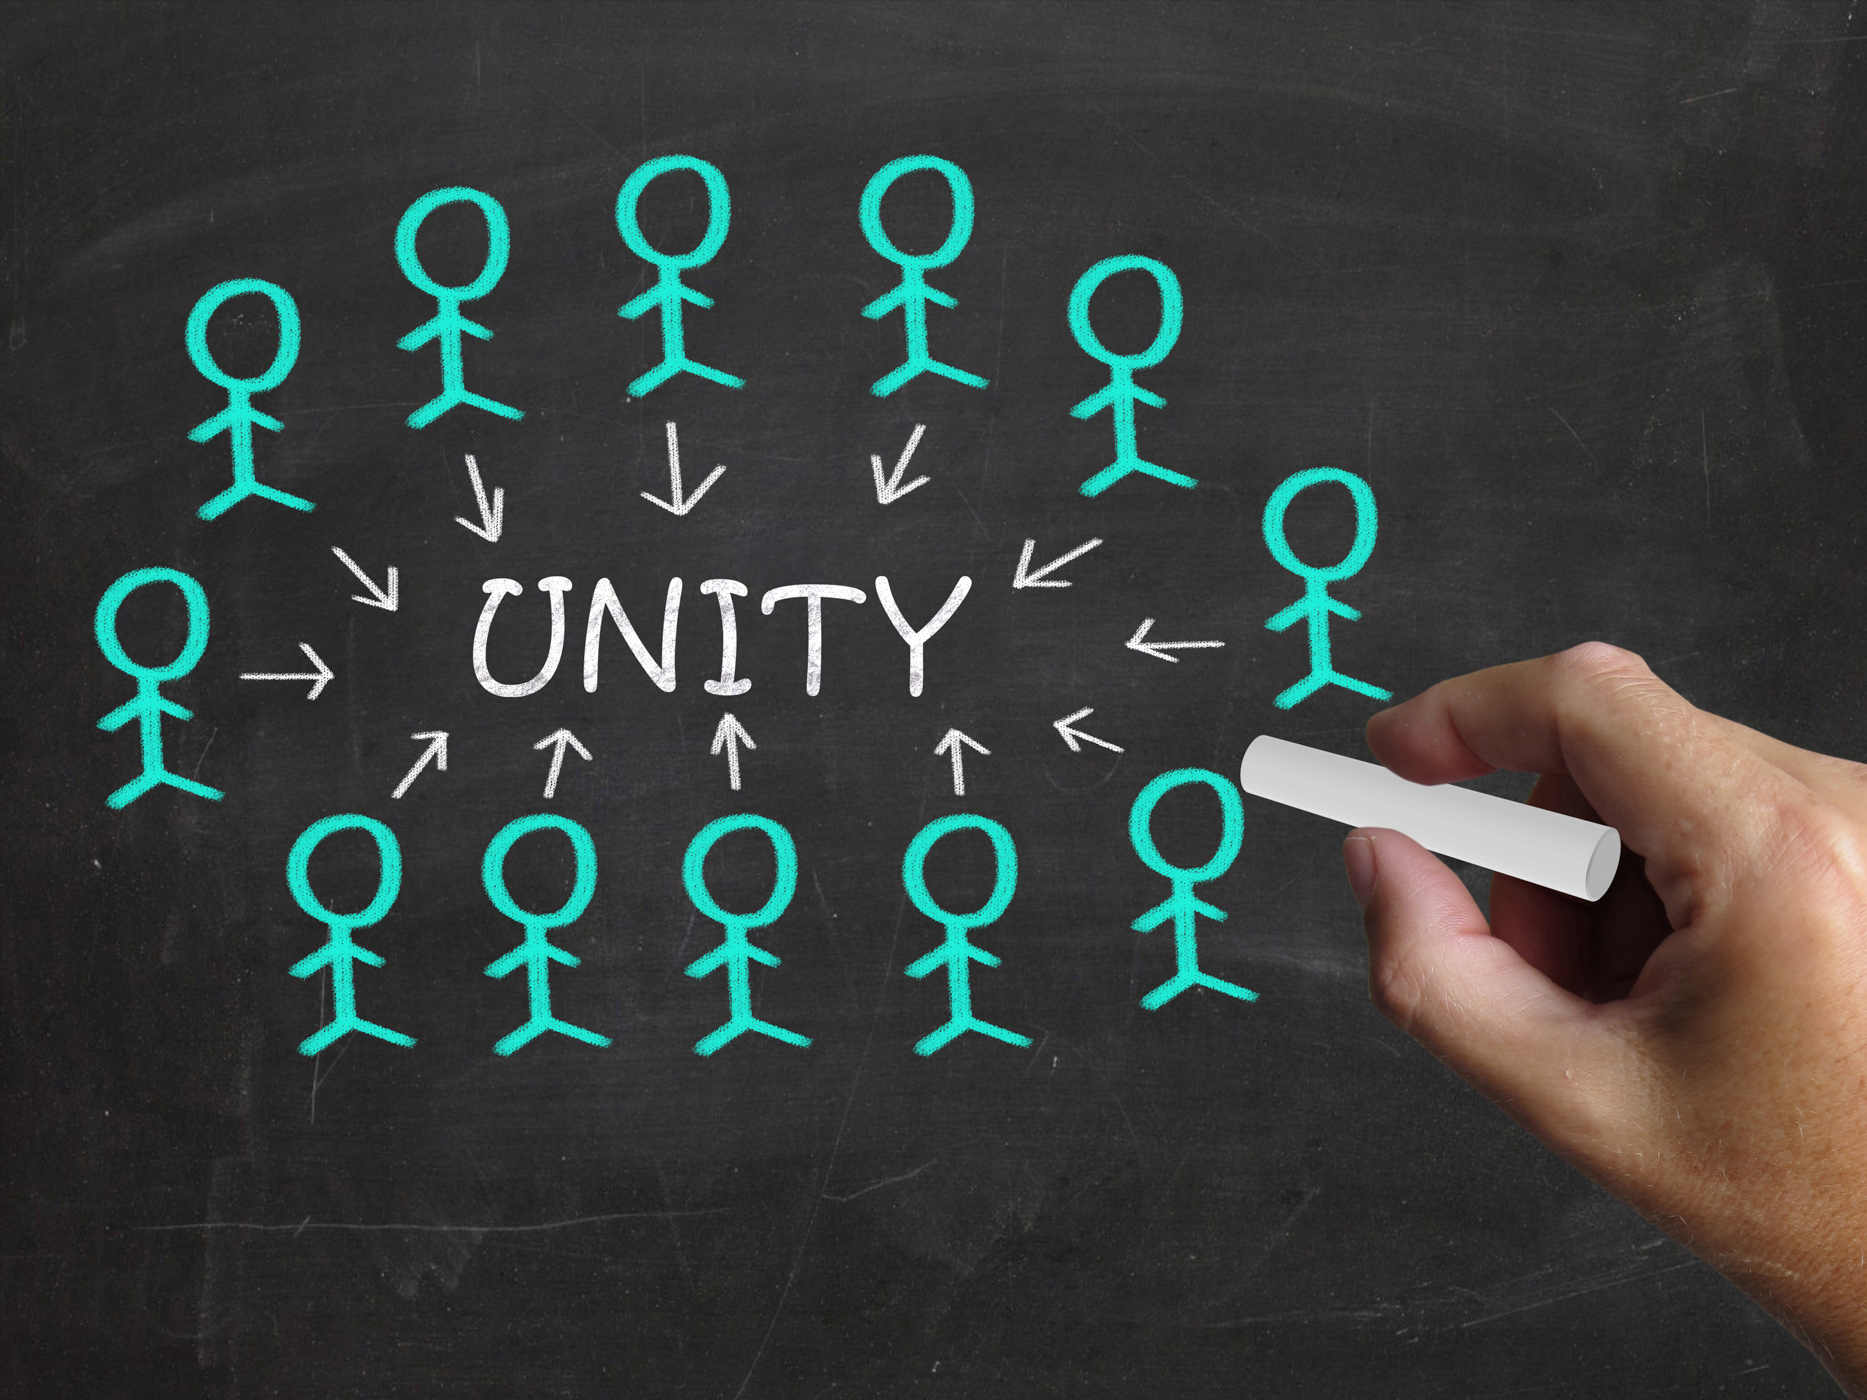 Unity on blackboard shows partner unity or cooperation photo